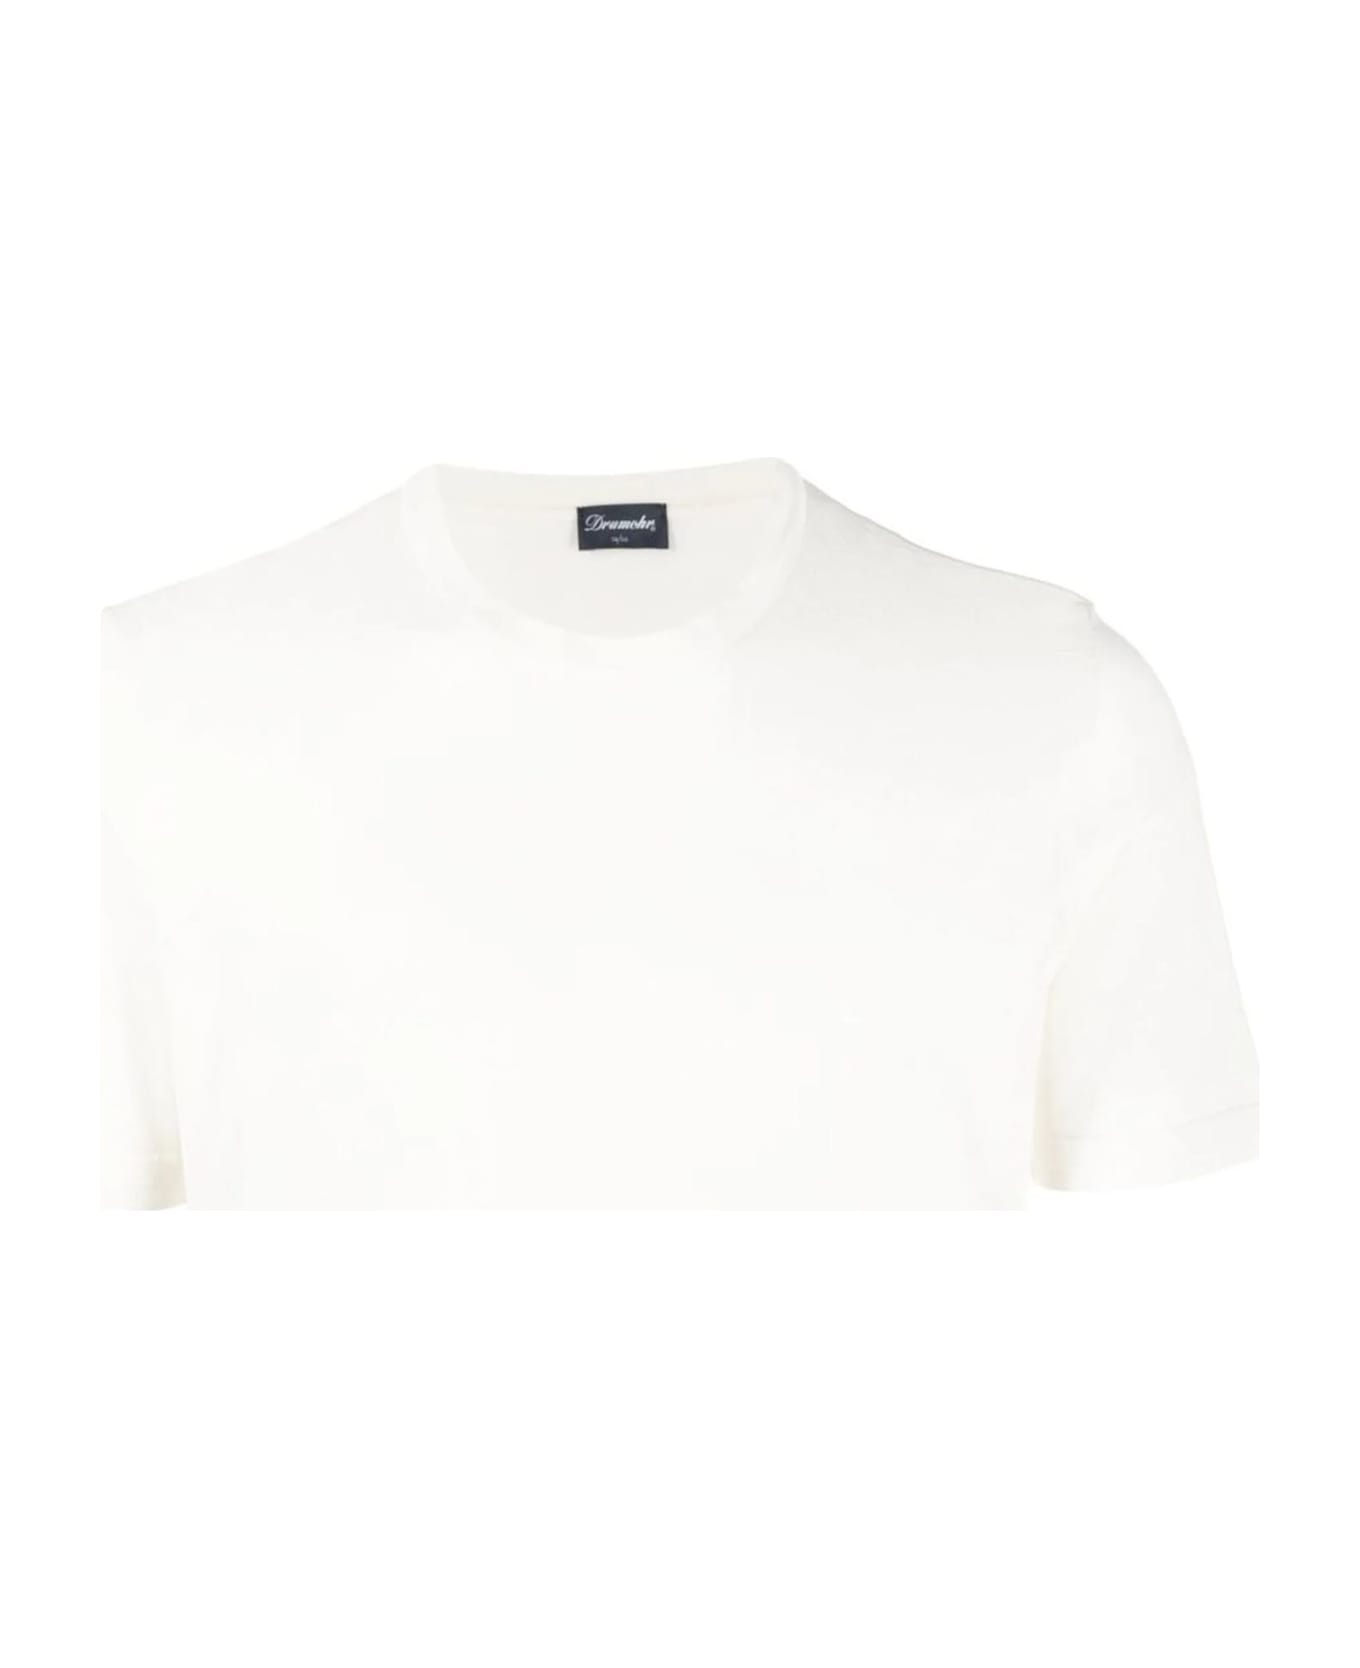 Drumohr White Cotton T-shirt - White